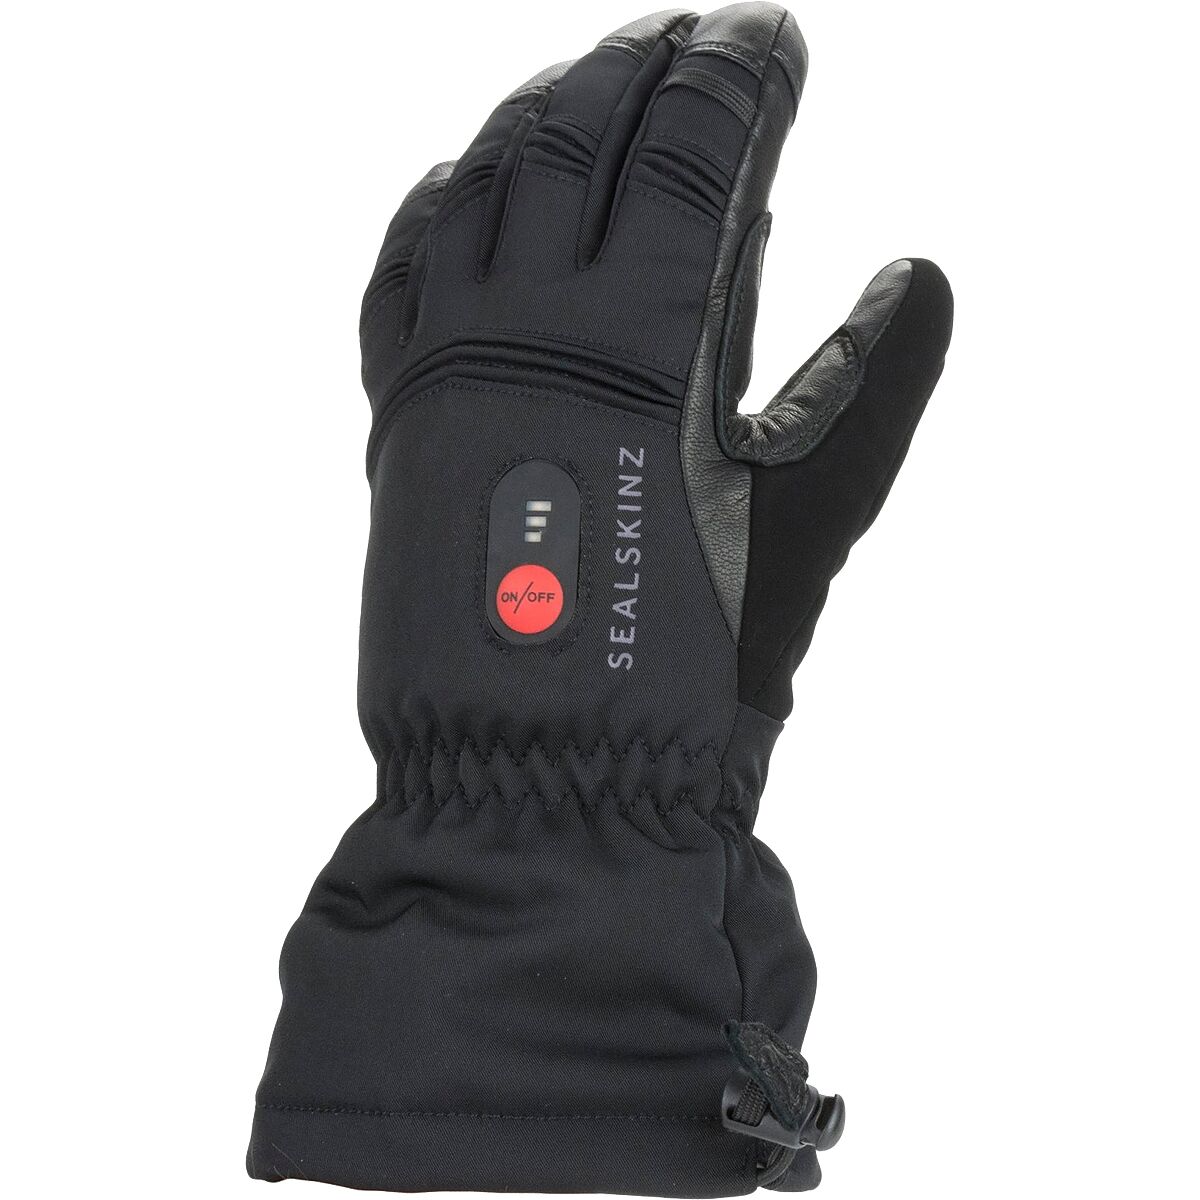 SealSkinz Waterproof Heated Gauntlet Glove Black